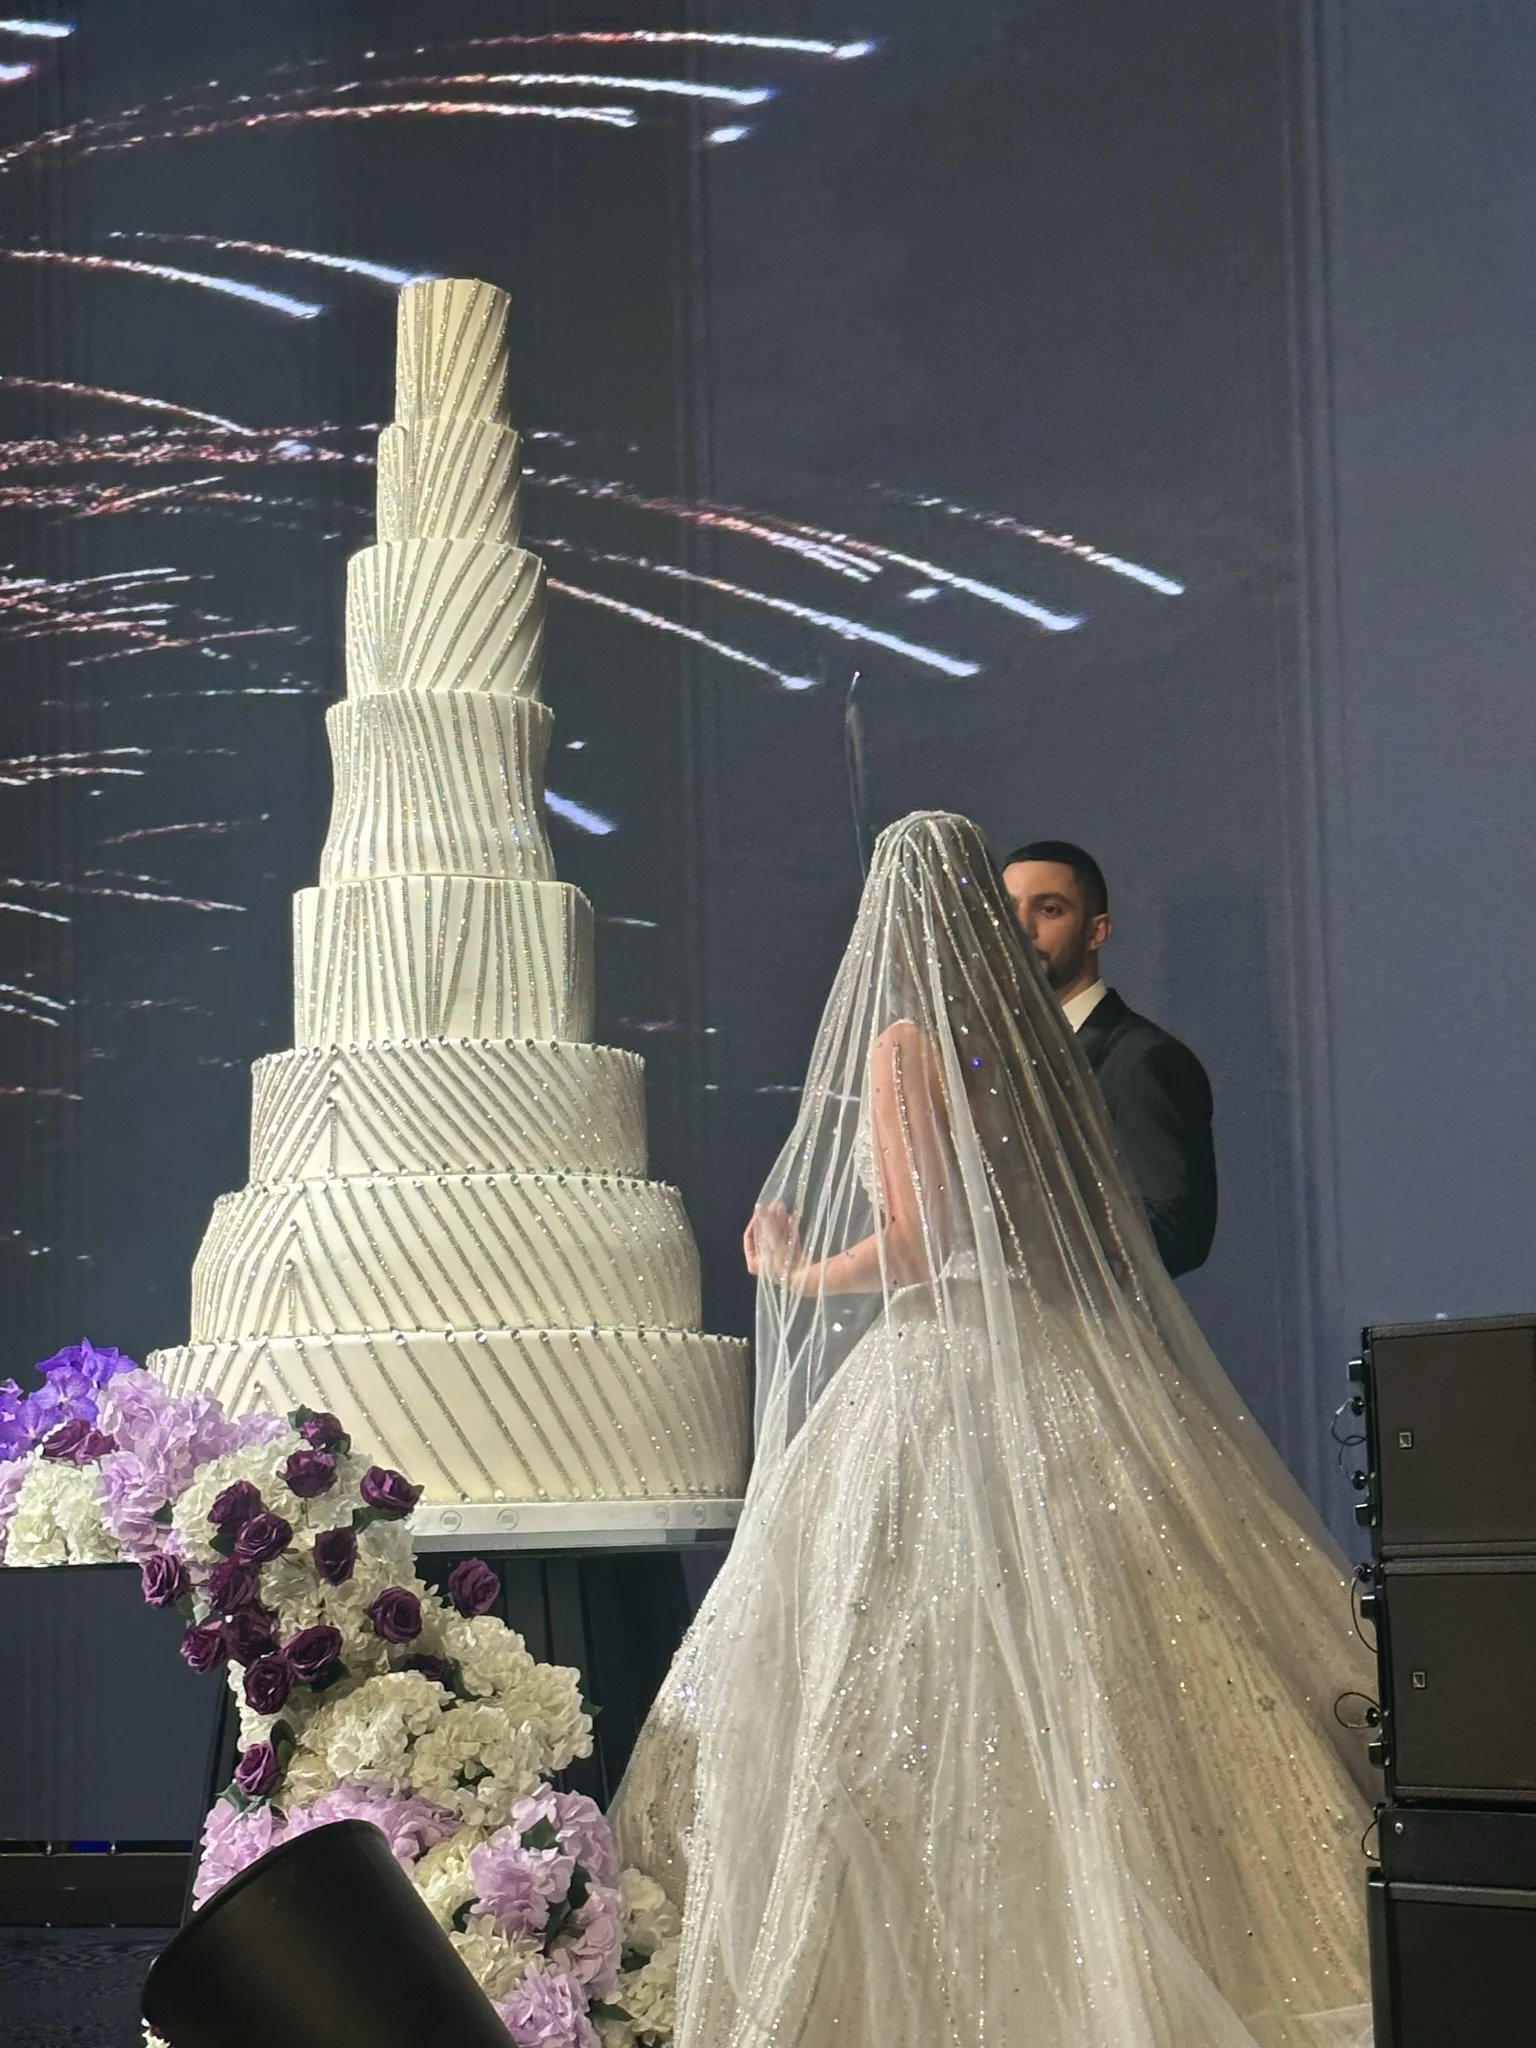 Wedding cakes in lebanon